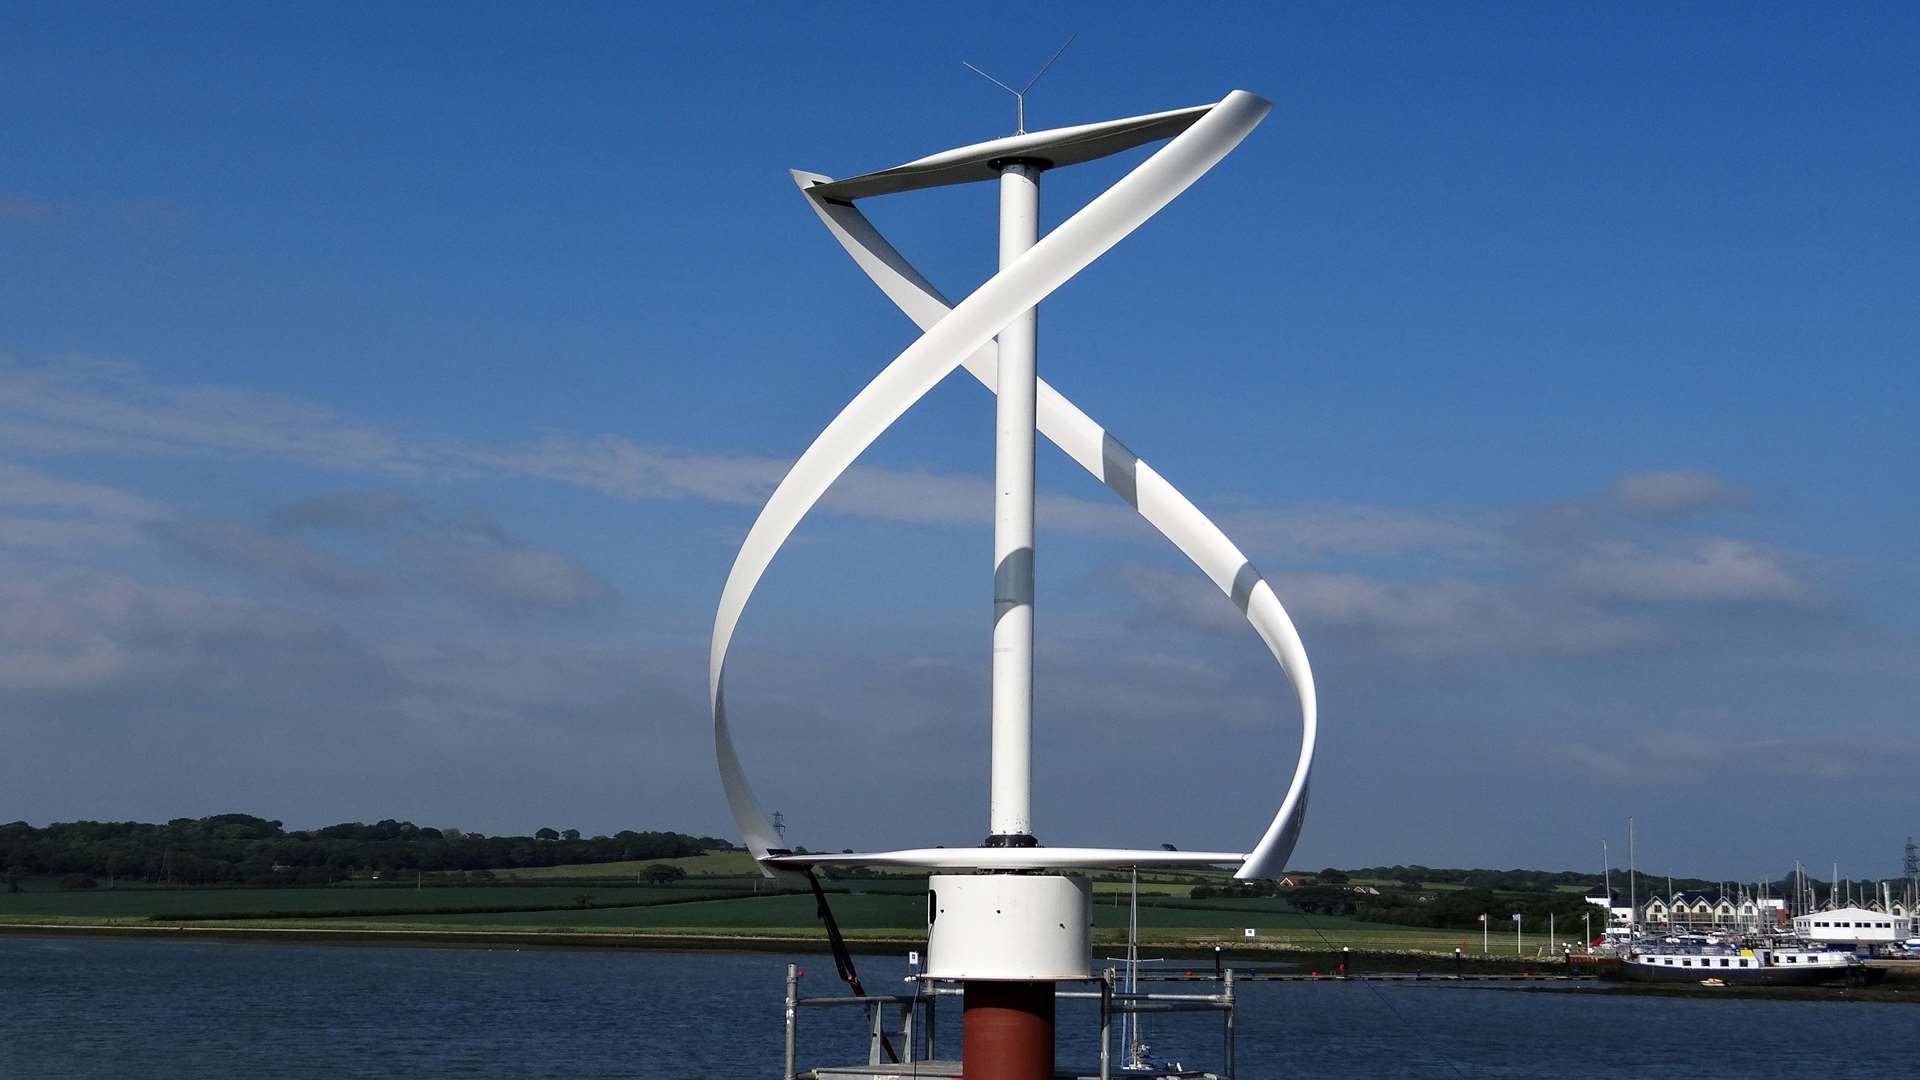 A wind turbine designed by X-Wind Power